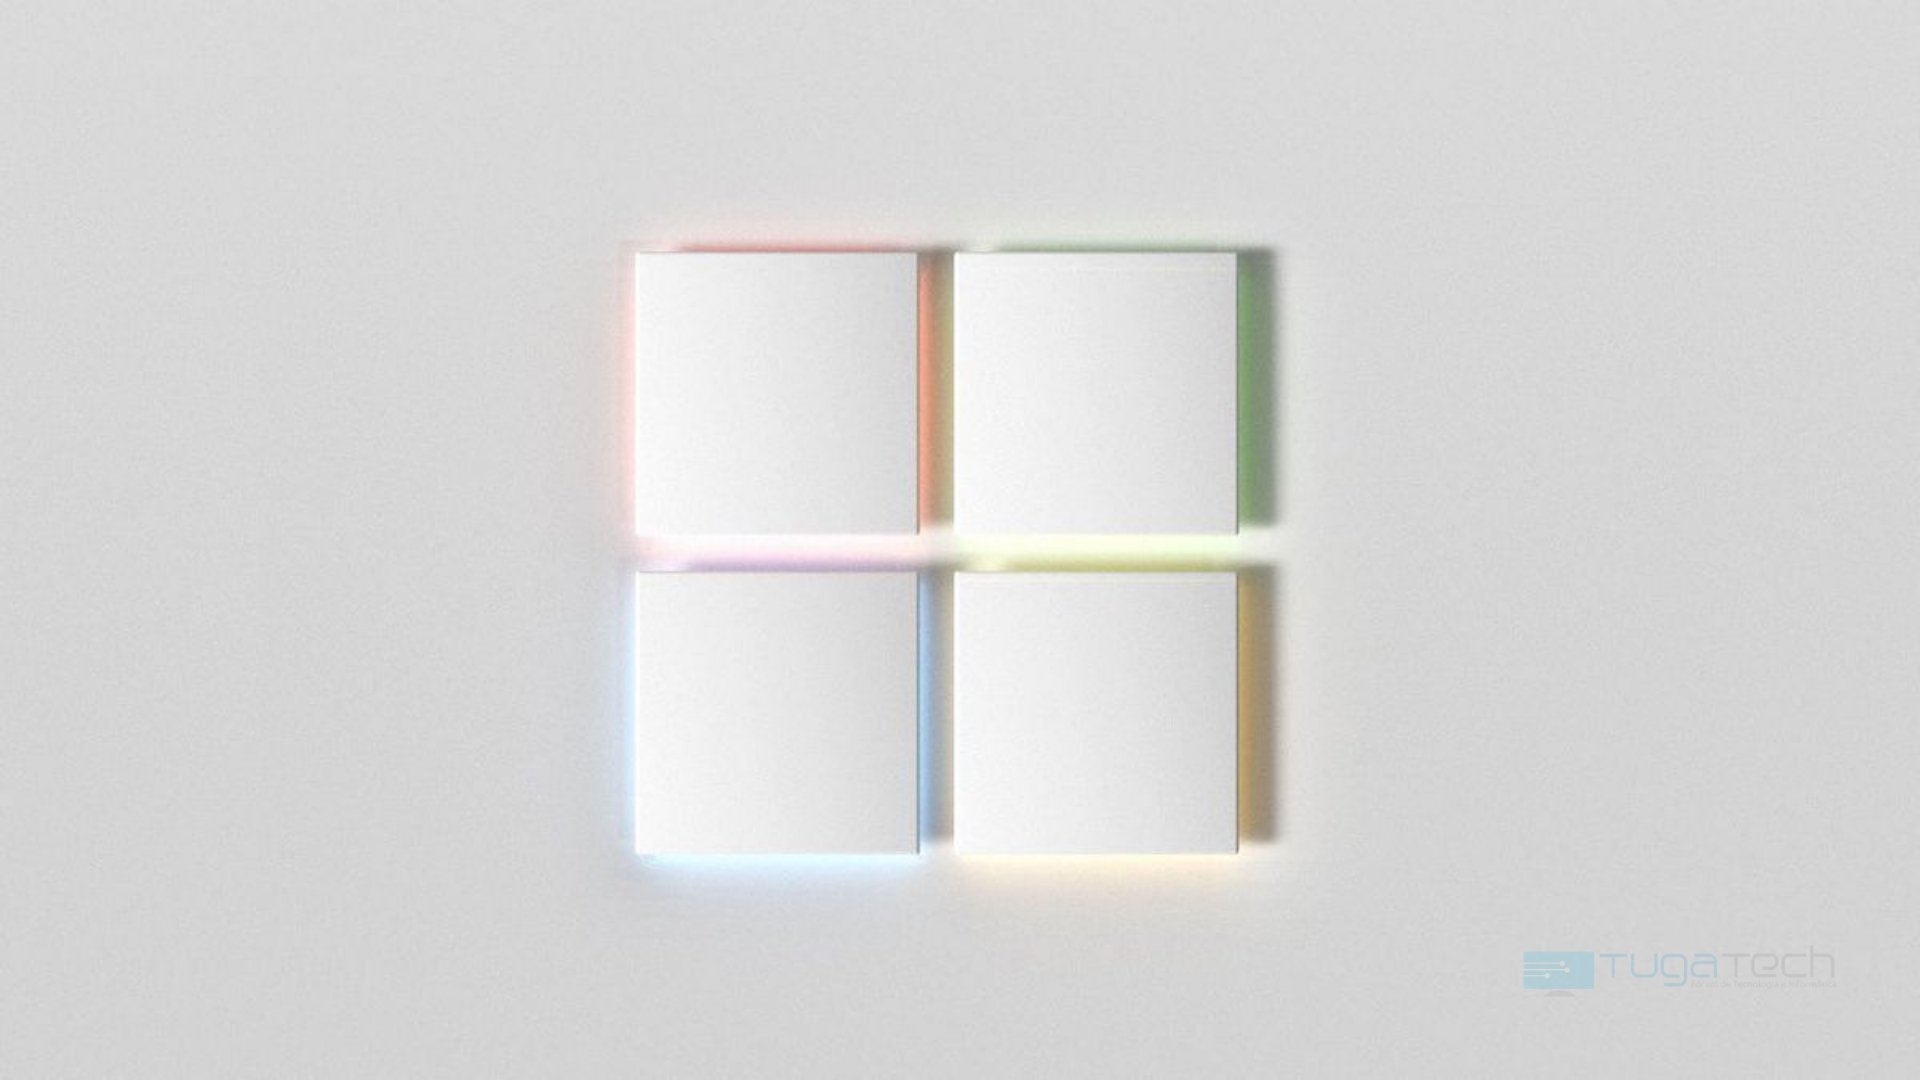 Windows 11 logo da empresa